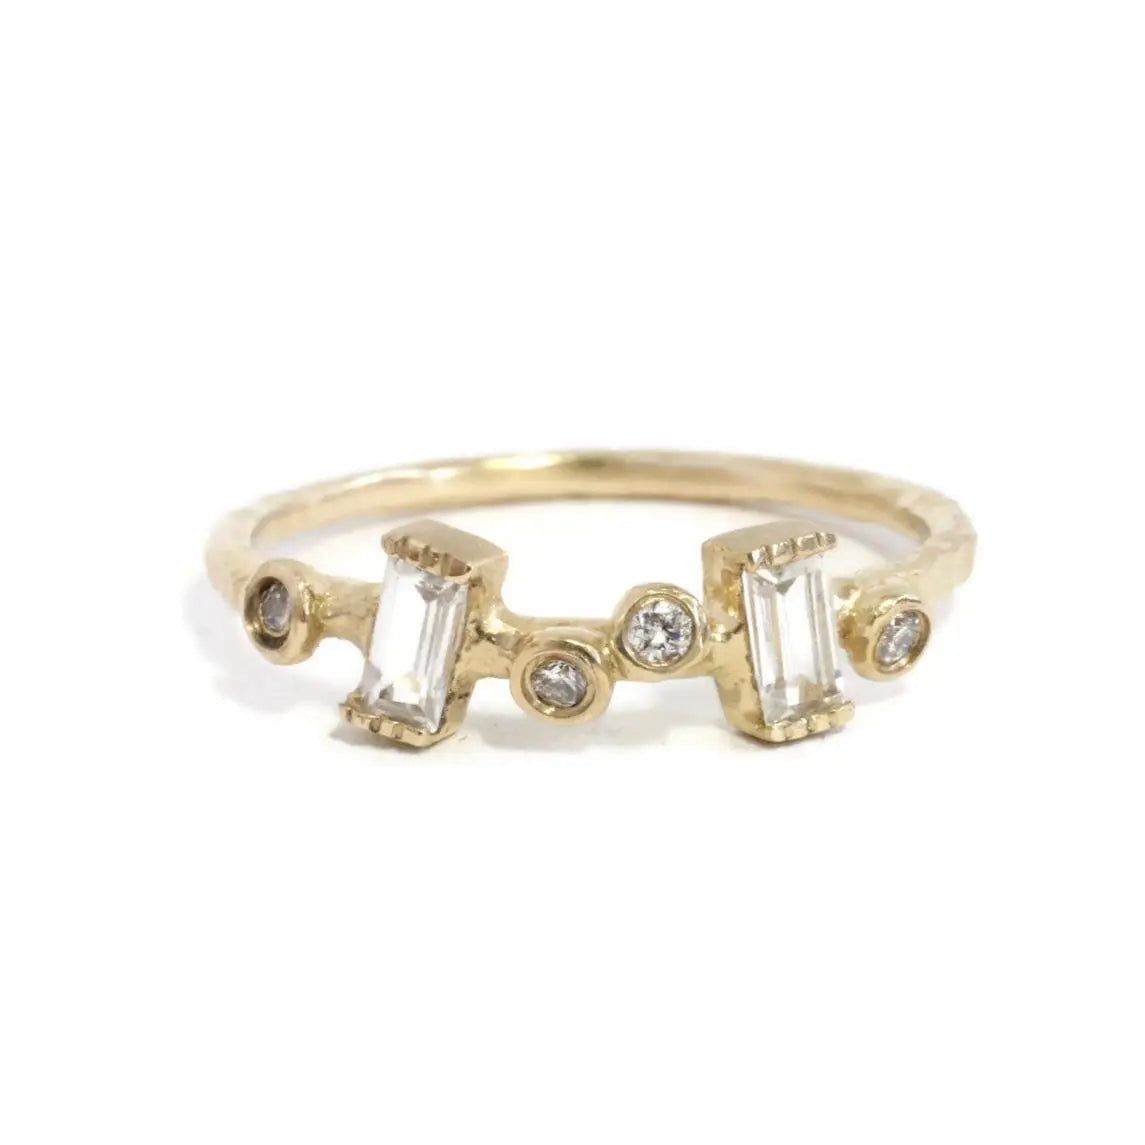 Topaz + Diamond Garden Ring - Size 7.5